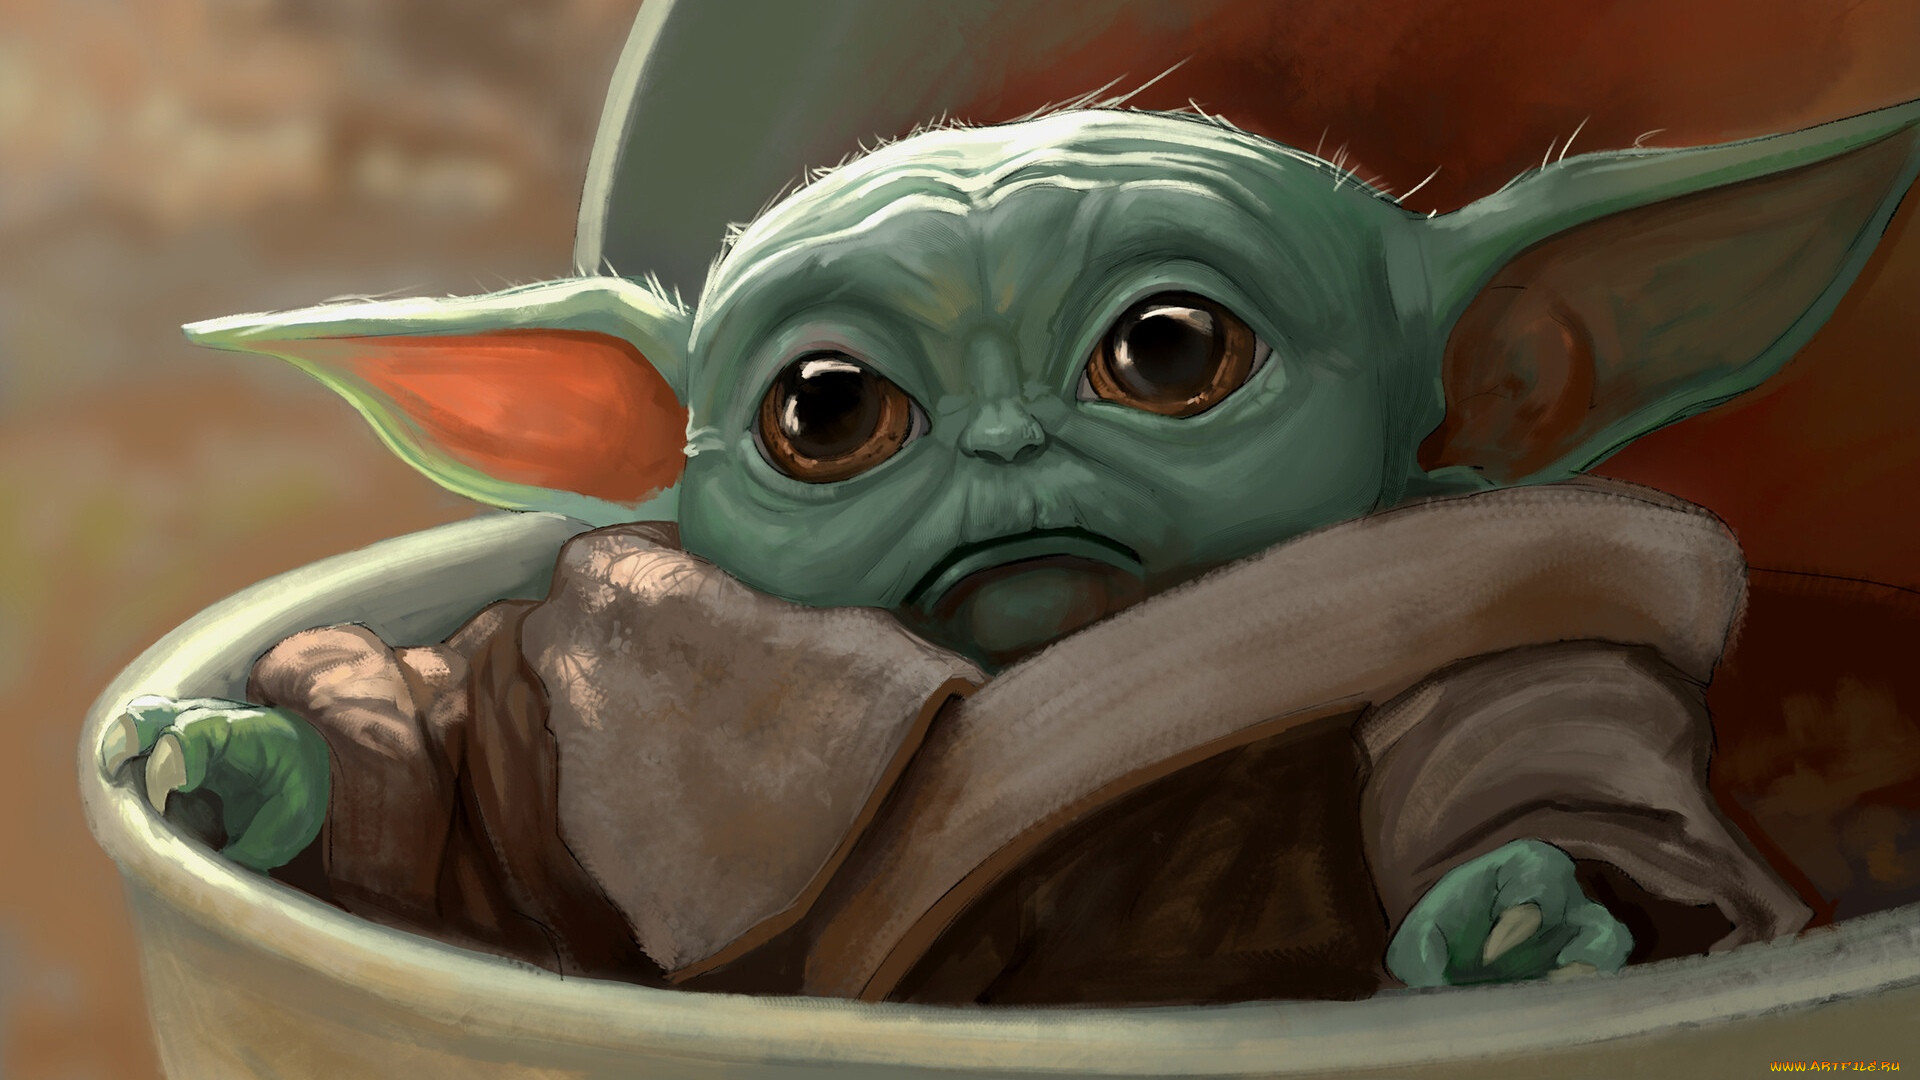 The Mandalorian Artwork Science Fiction Baby Yoda 1920x1080